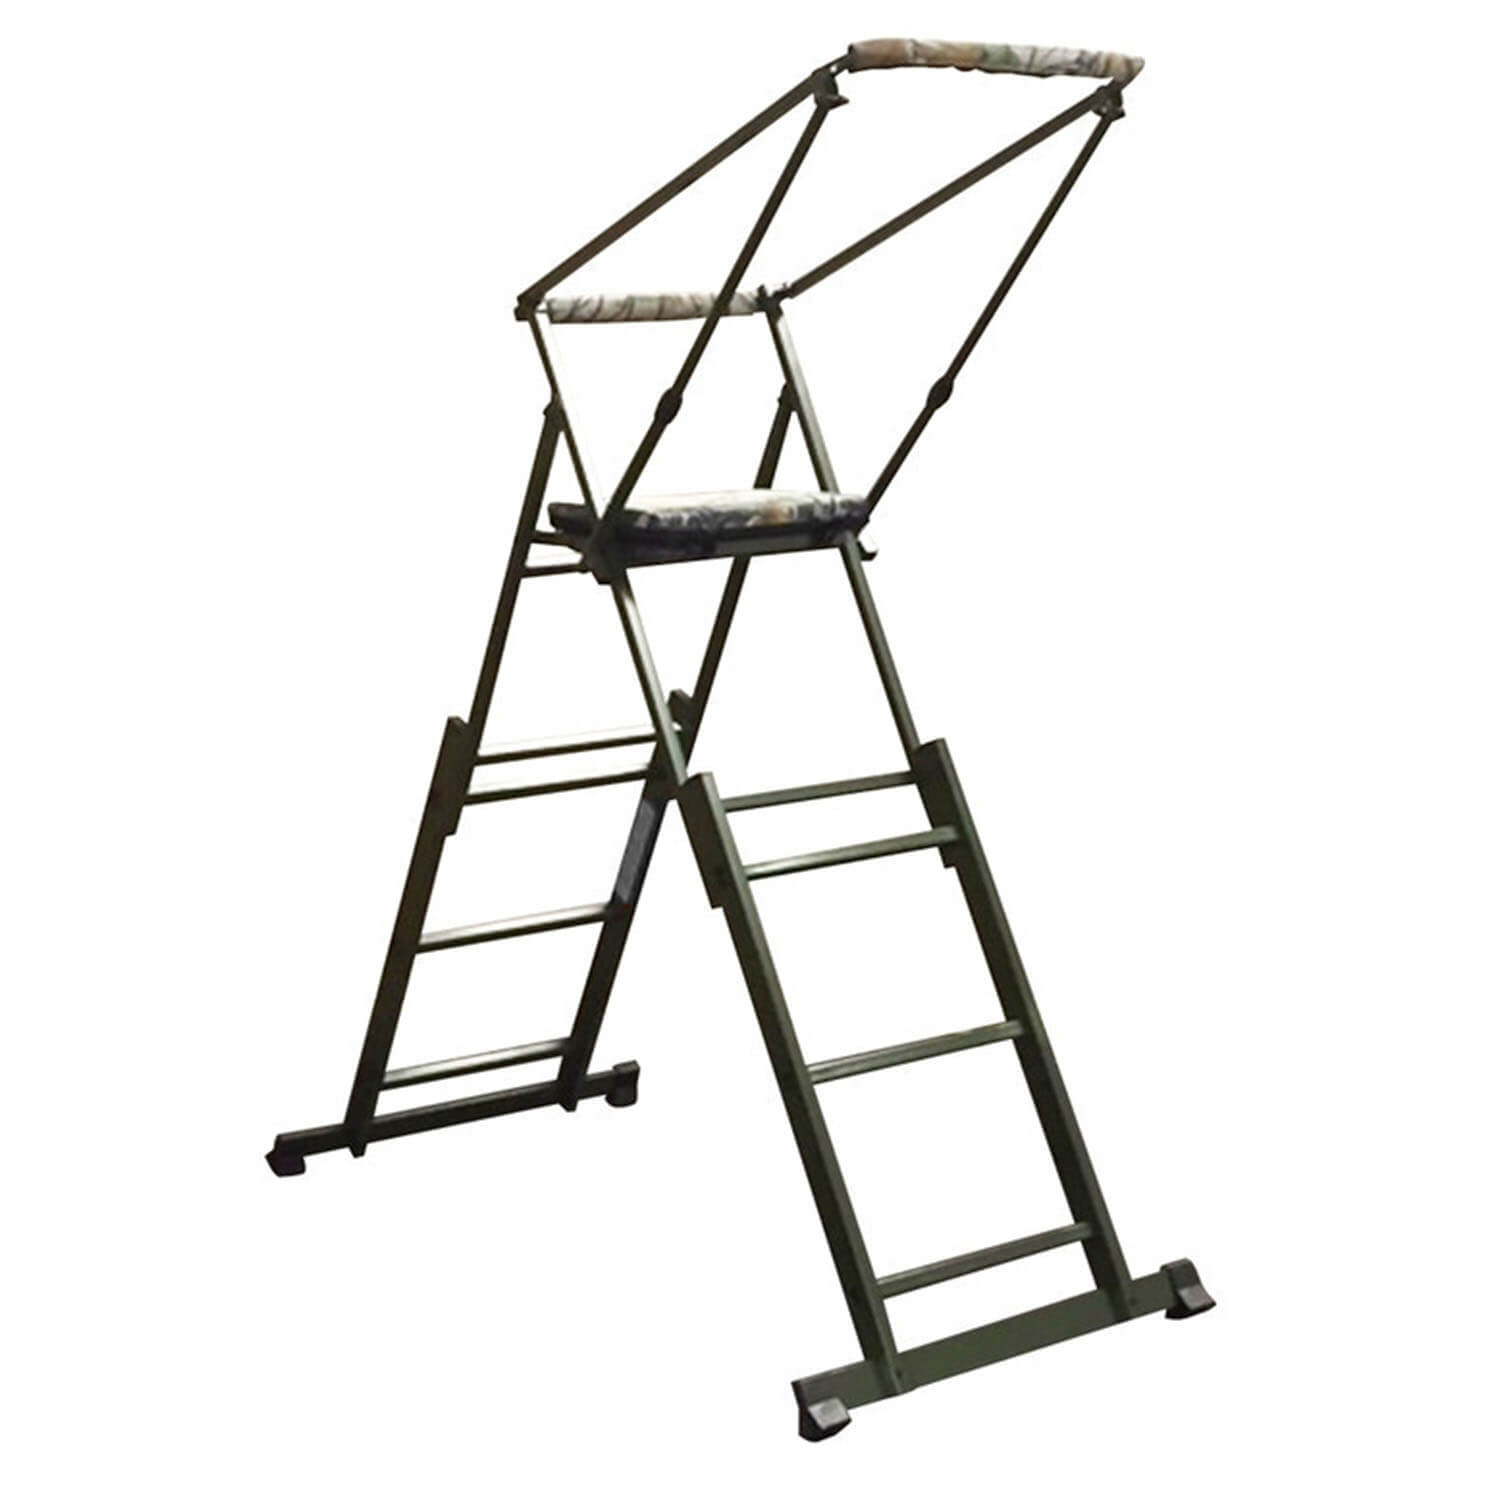 Farm-Land hunting ladder mobile stand - Tree Ladder